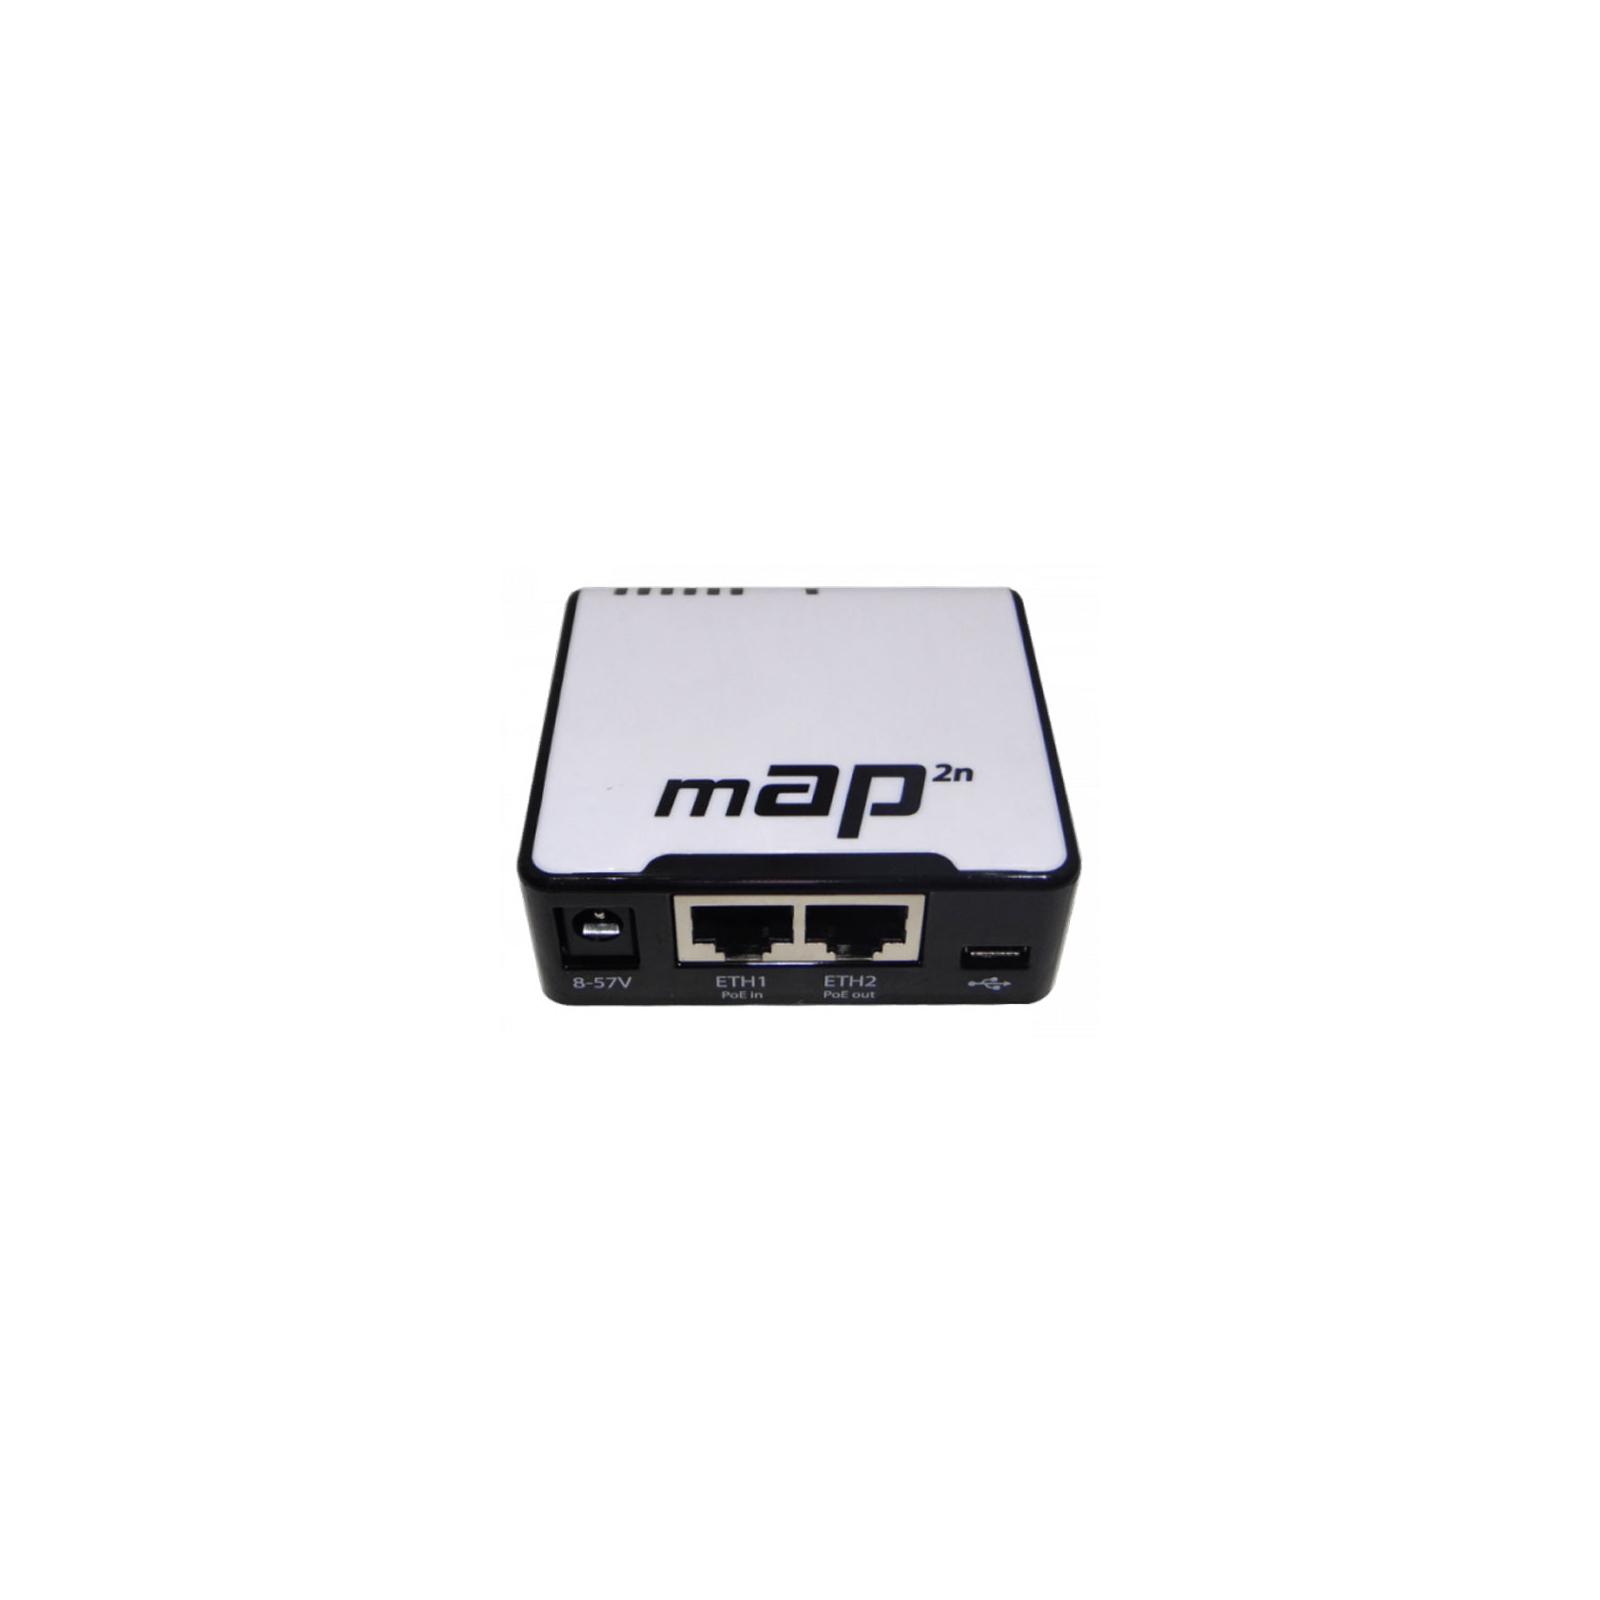 Точка доступа Wi-Fi Mikrotik RBmAP2n изображение 5